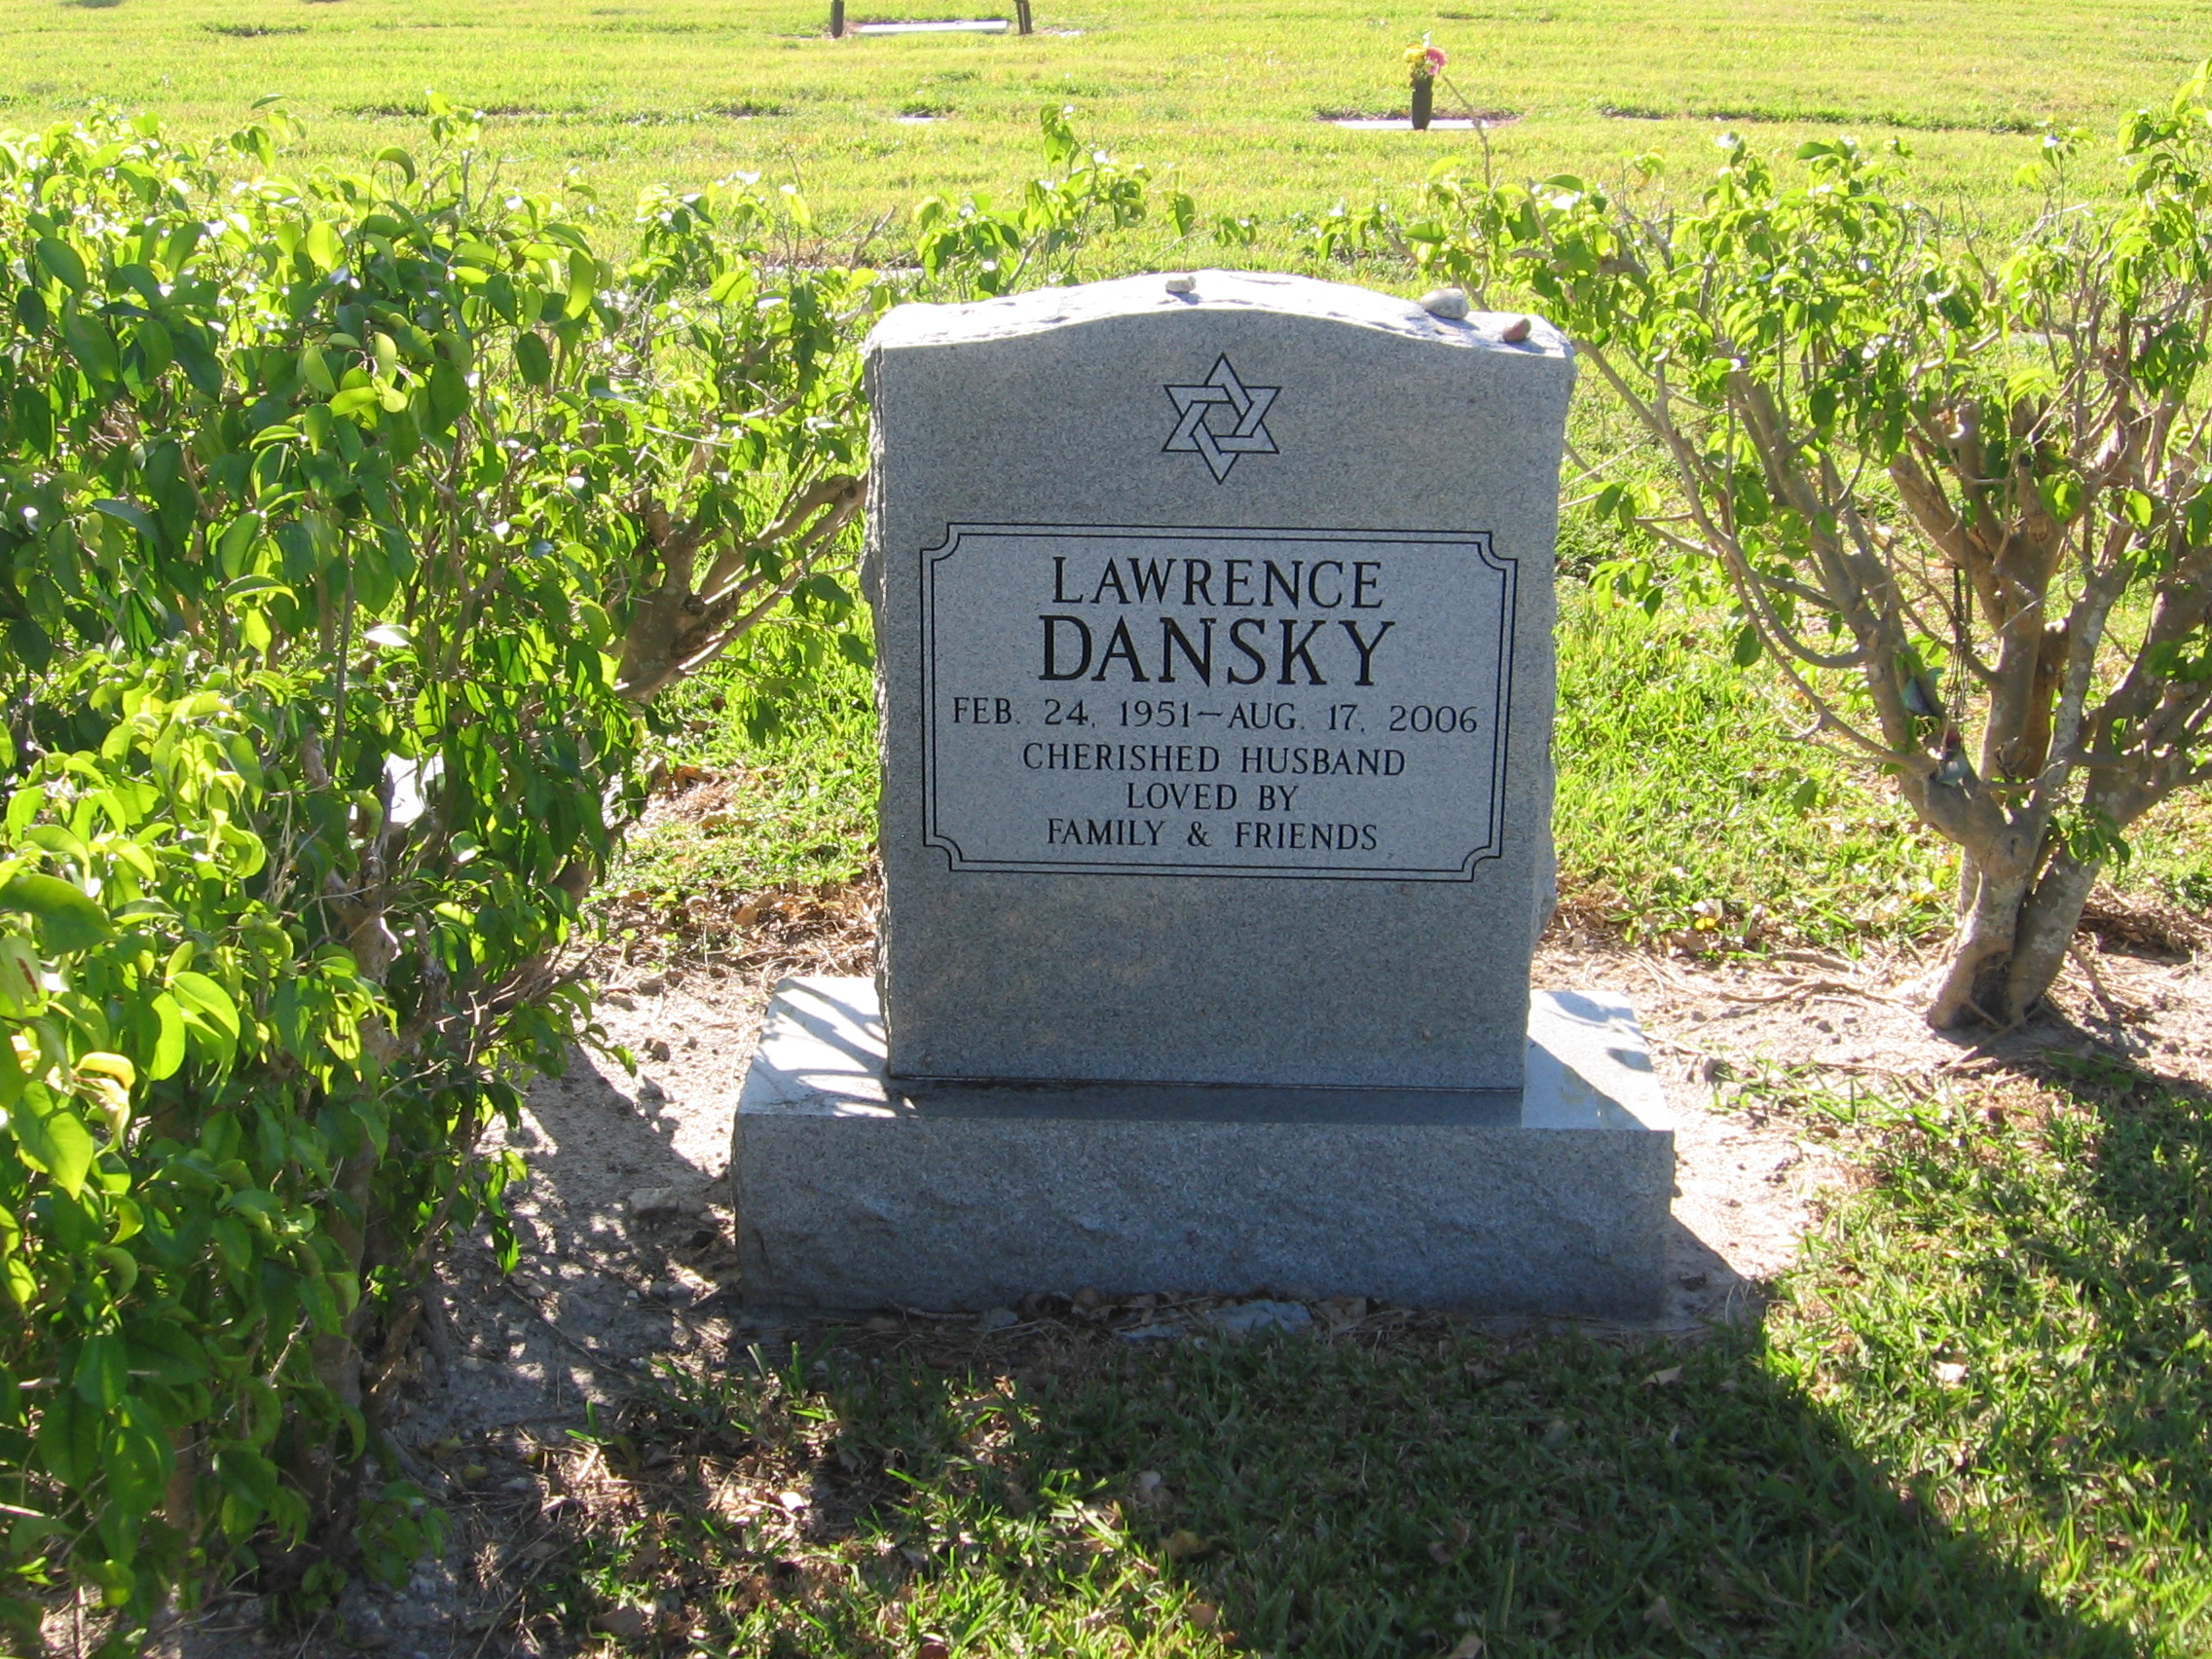 Lawrence Dansky